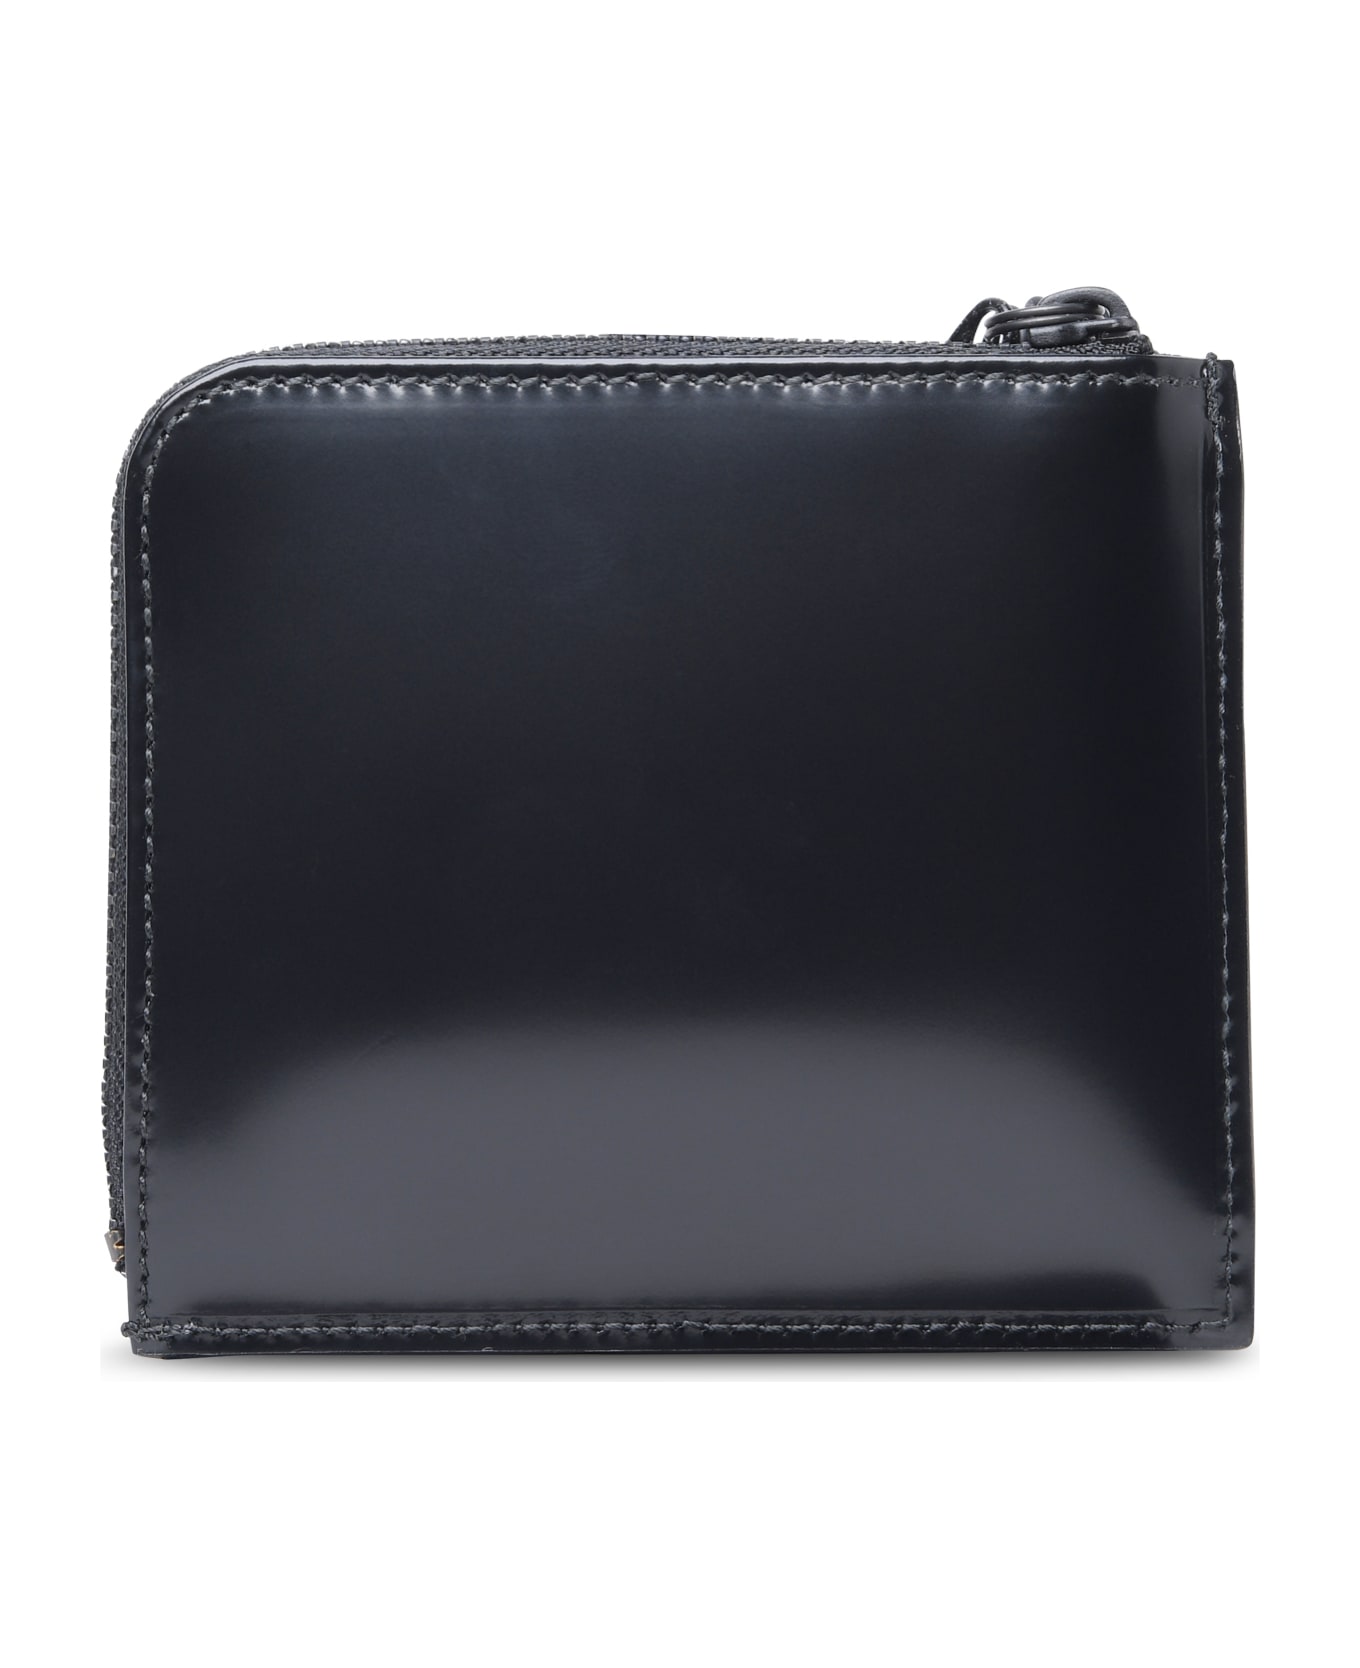 Comme des Garçons Wallet 'medley' Black Leather Wallet - Black 財布